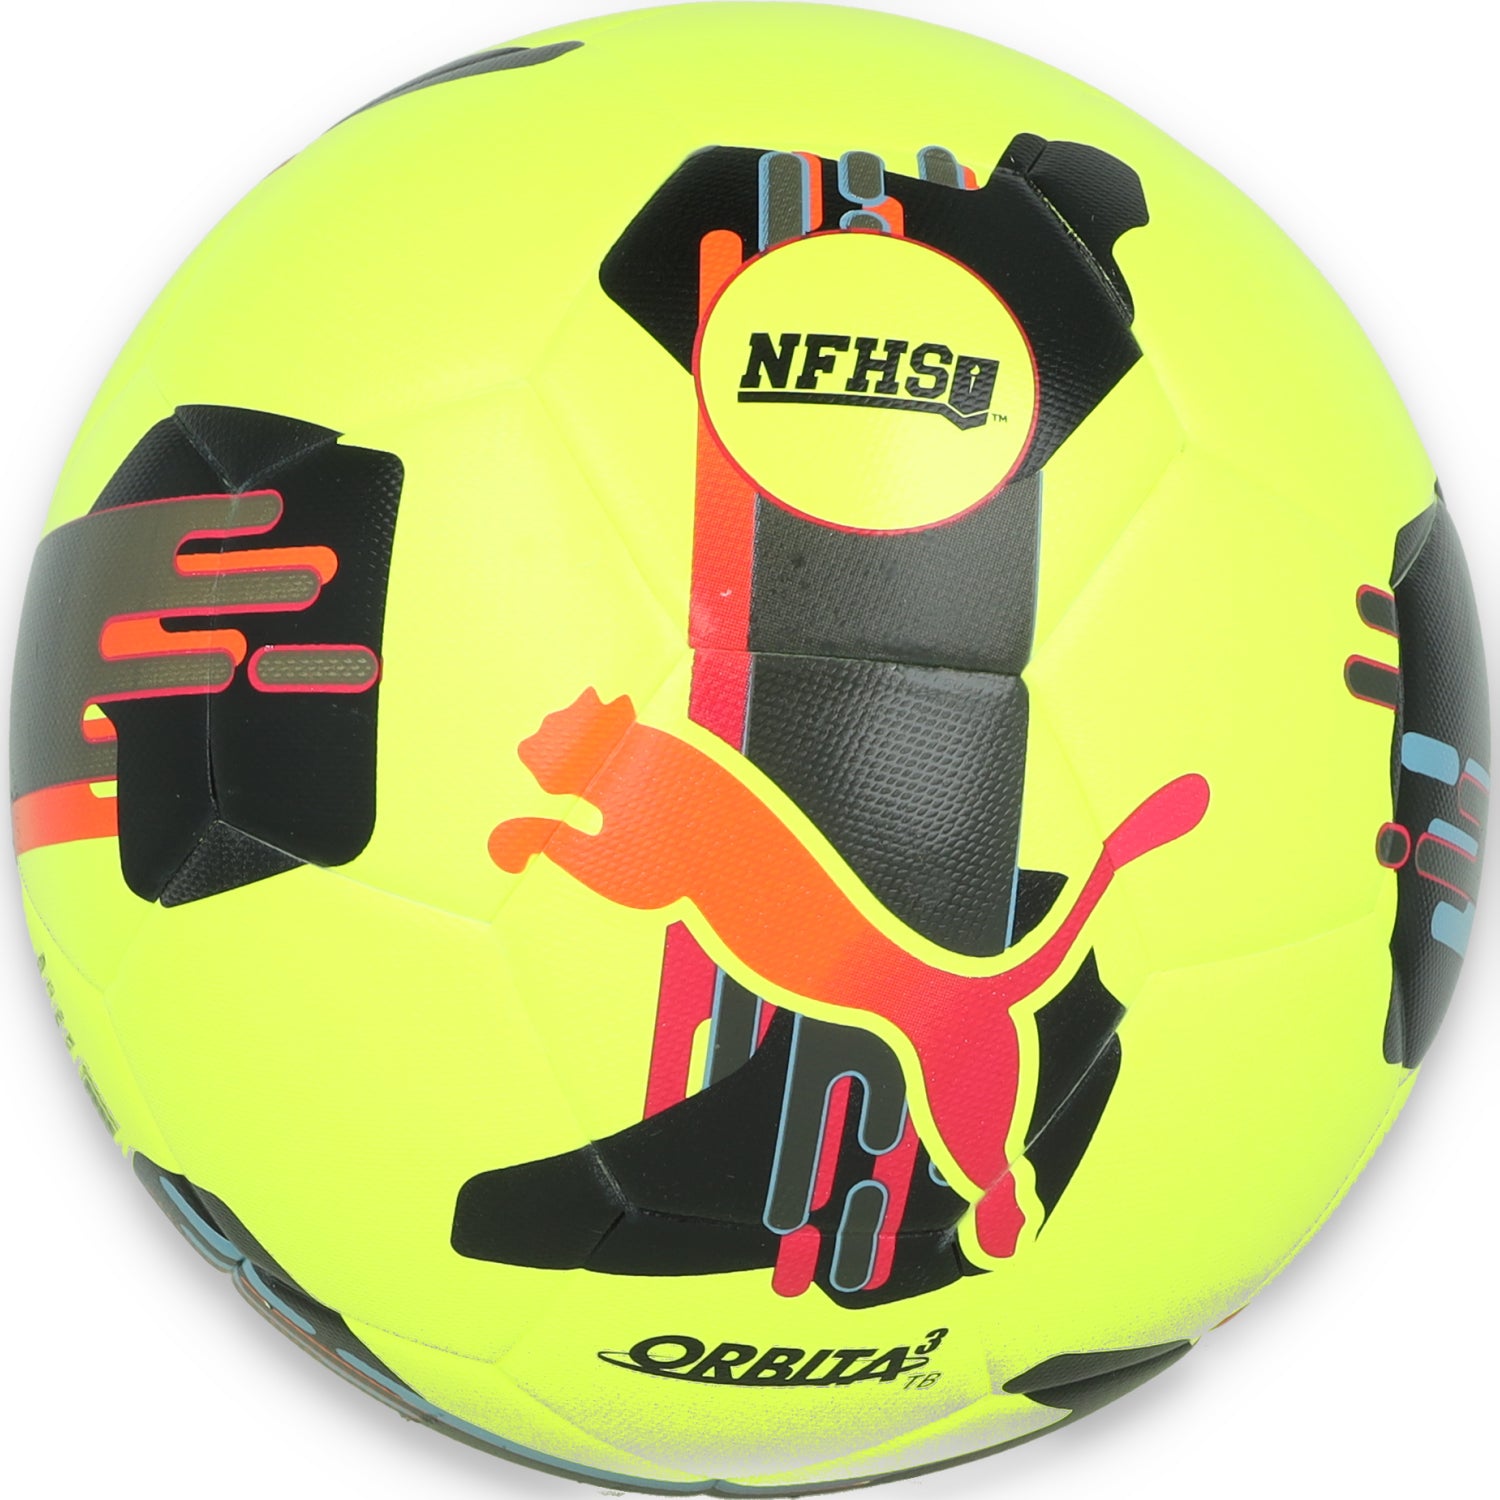 Puma Orbita 3 FIFA Quality NFHS Soccer Ball - Lemon Tonic-Multi